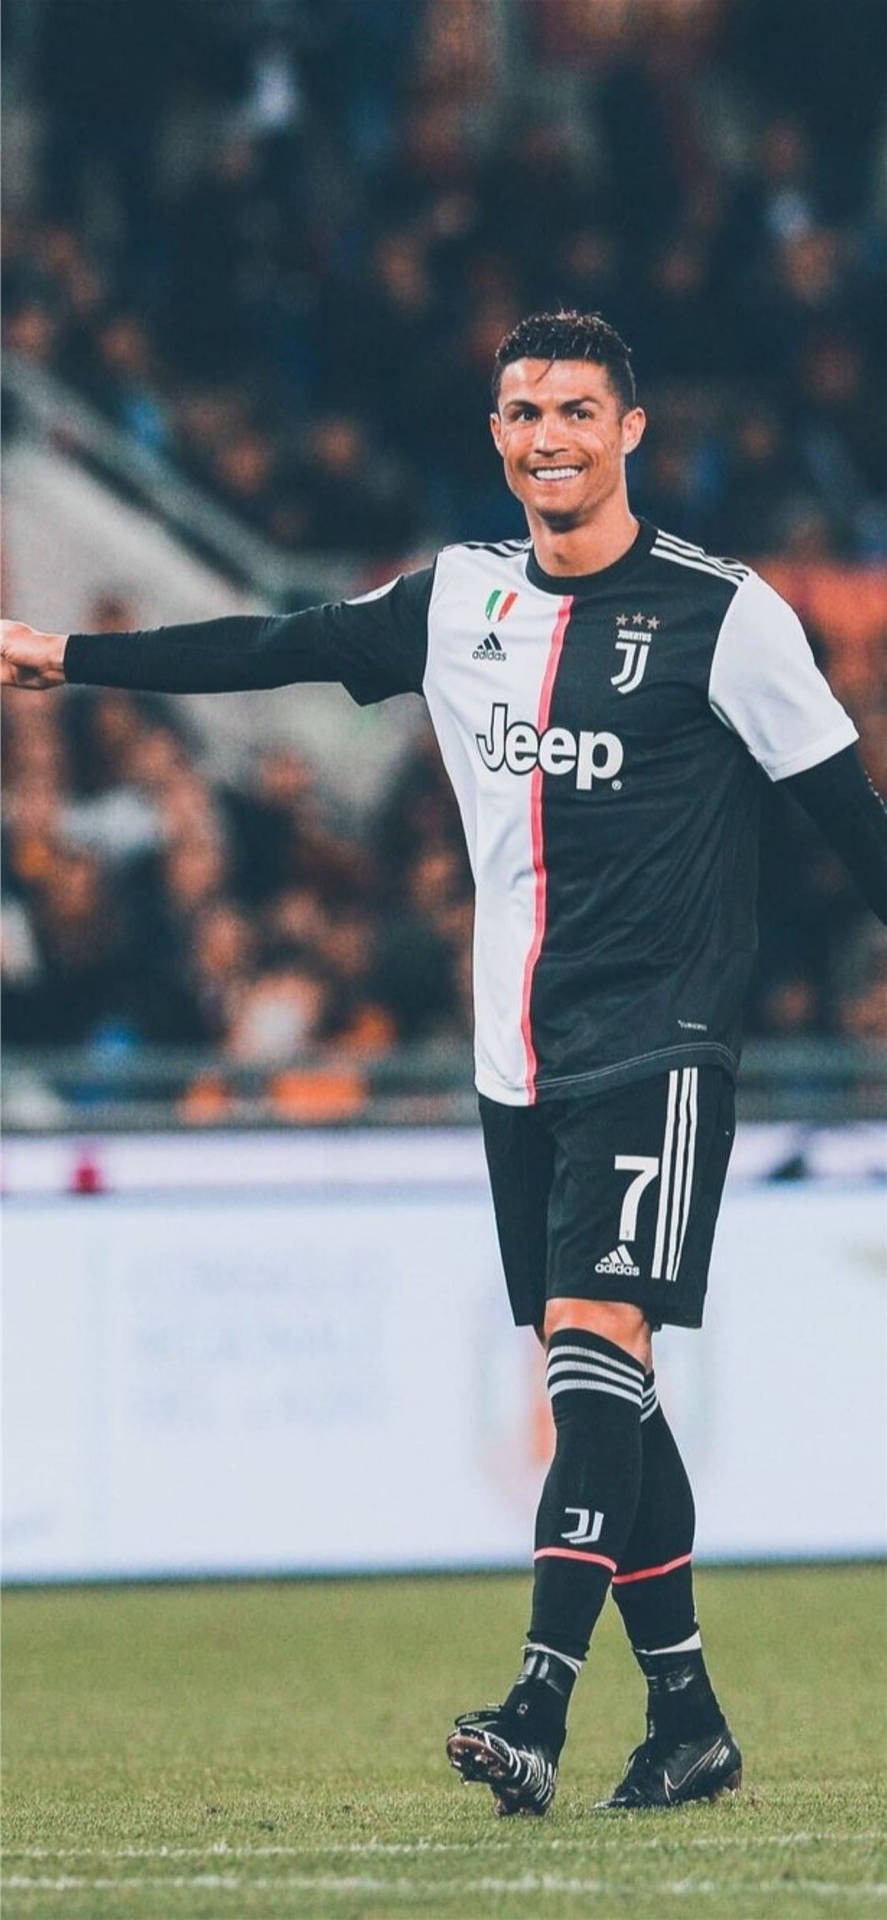 Download Juventus CR7 Cristiano Ronaldo iPhone Wallpaper | Wallpapers.com